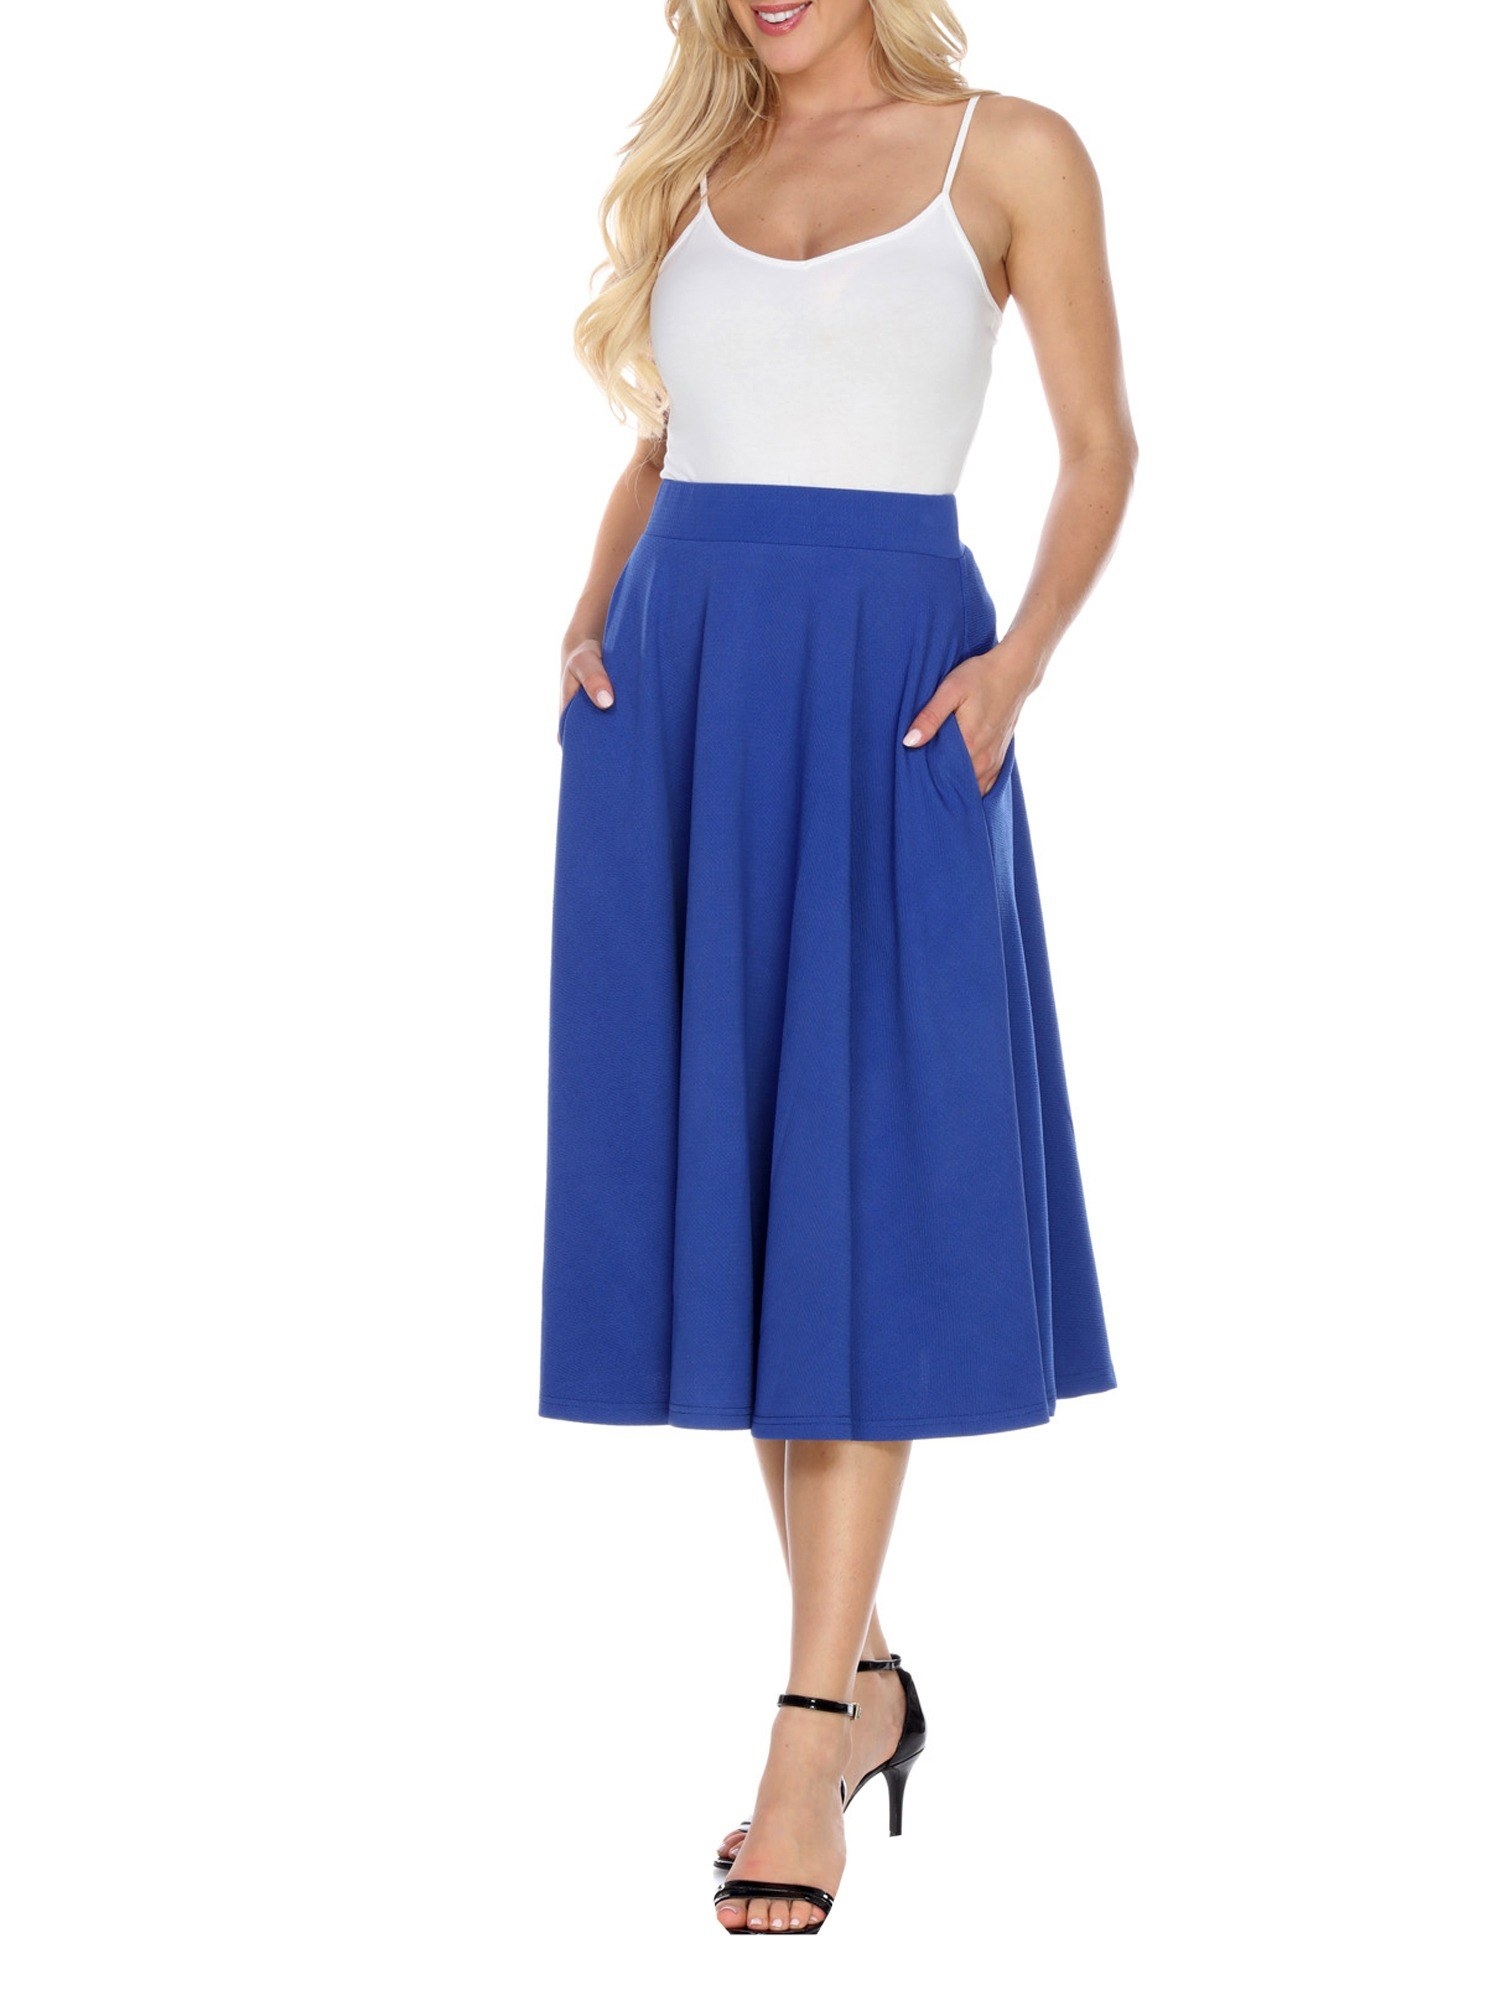 a model wearing the blue skirt